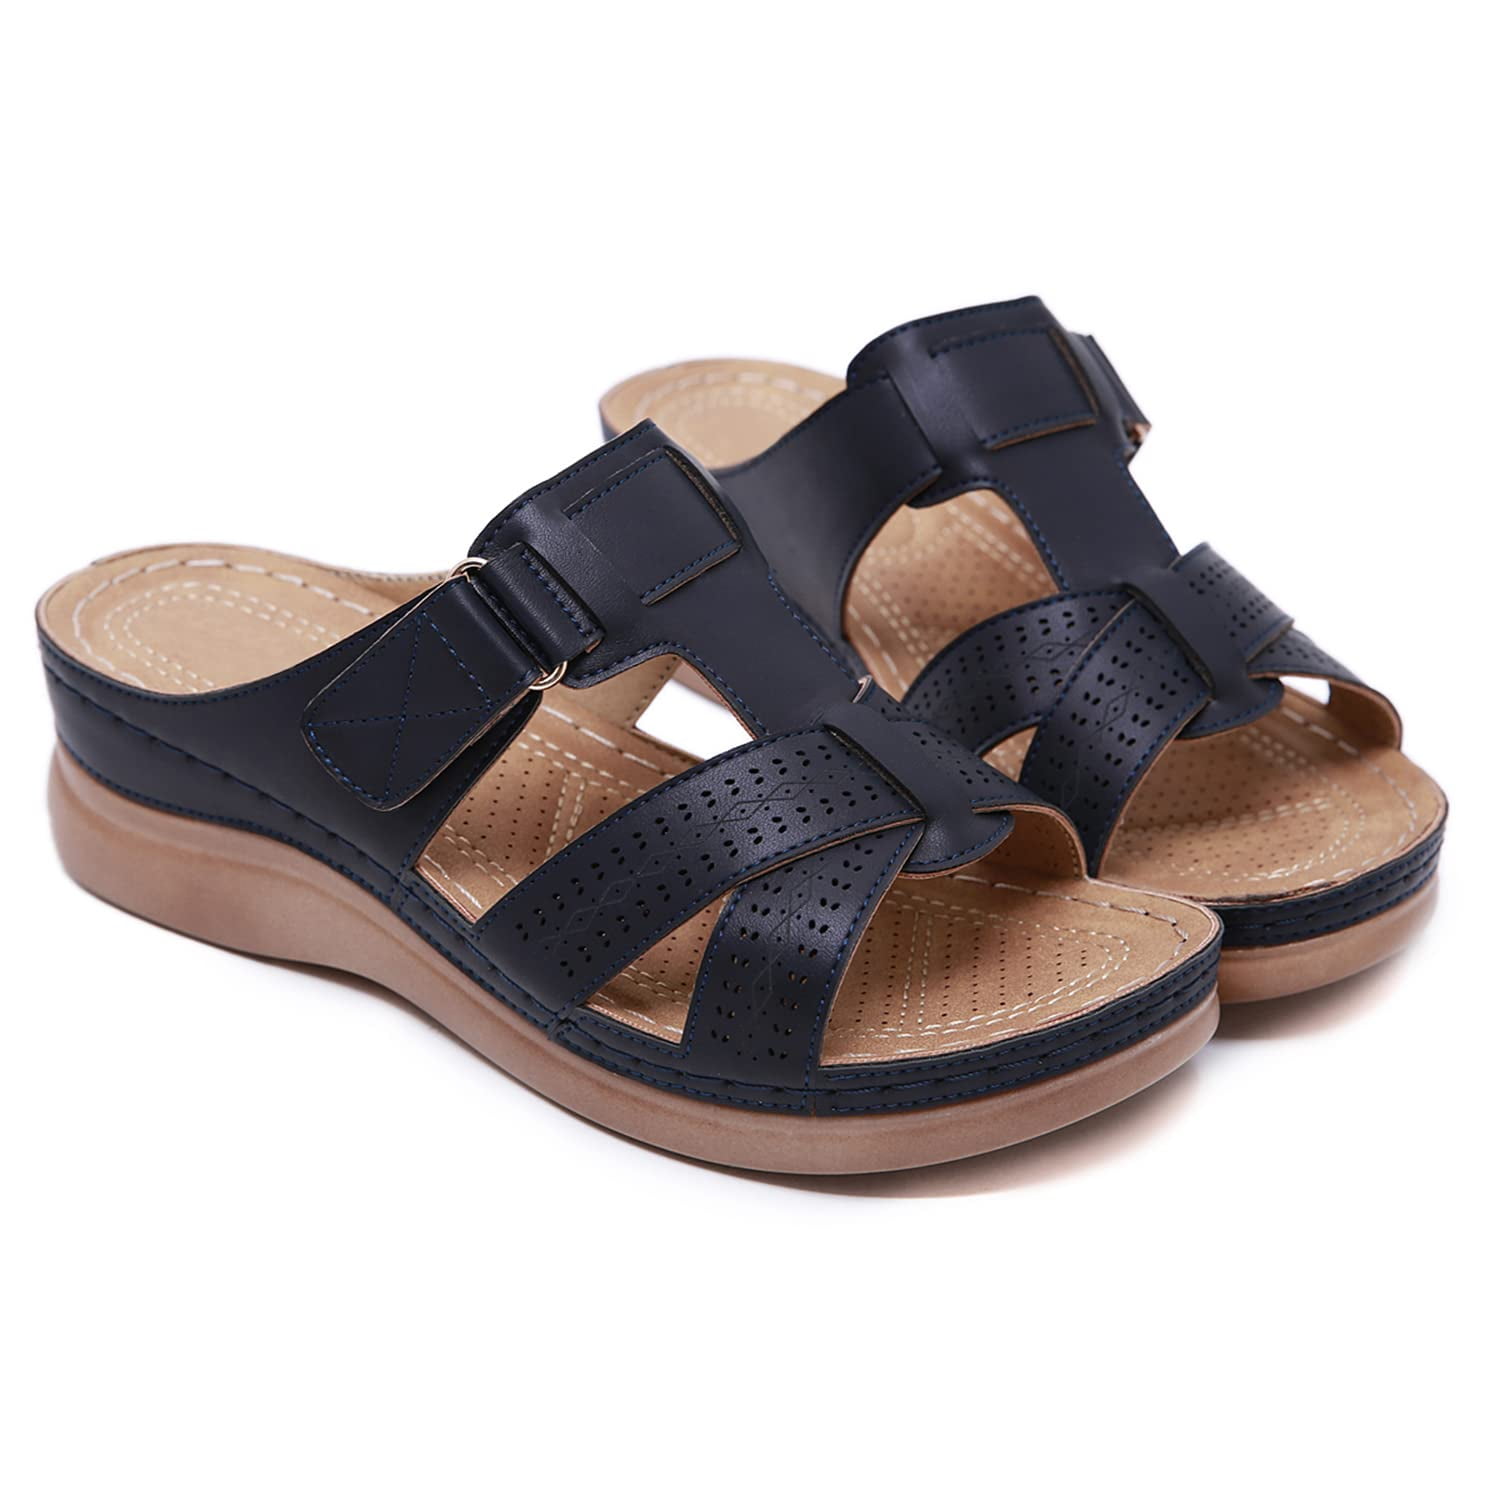 SWQZVT Wedges Sandals for Women Comfort Vintage Sandal Casual Summer ...